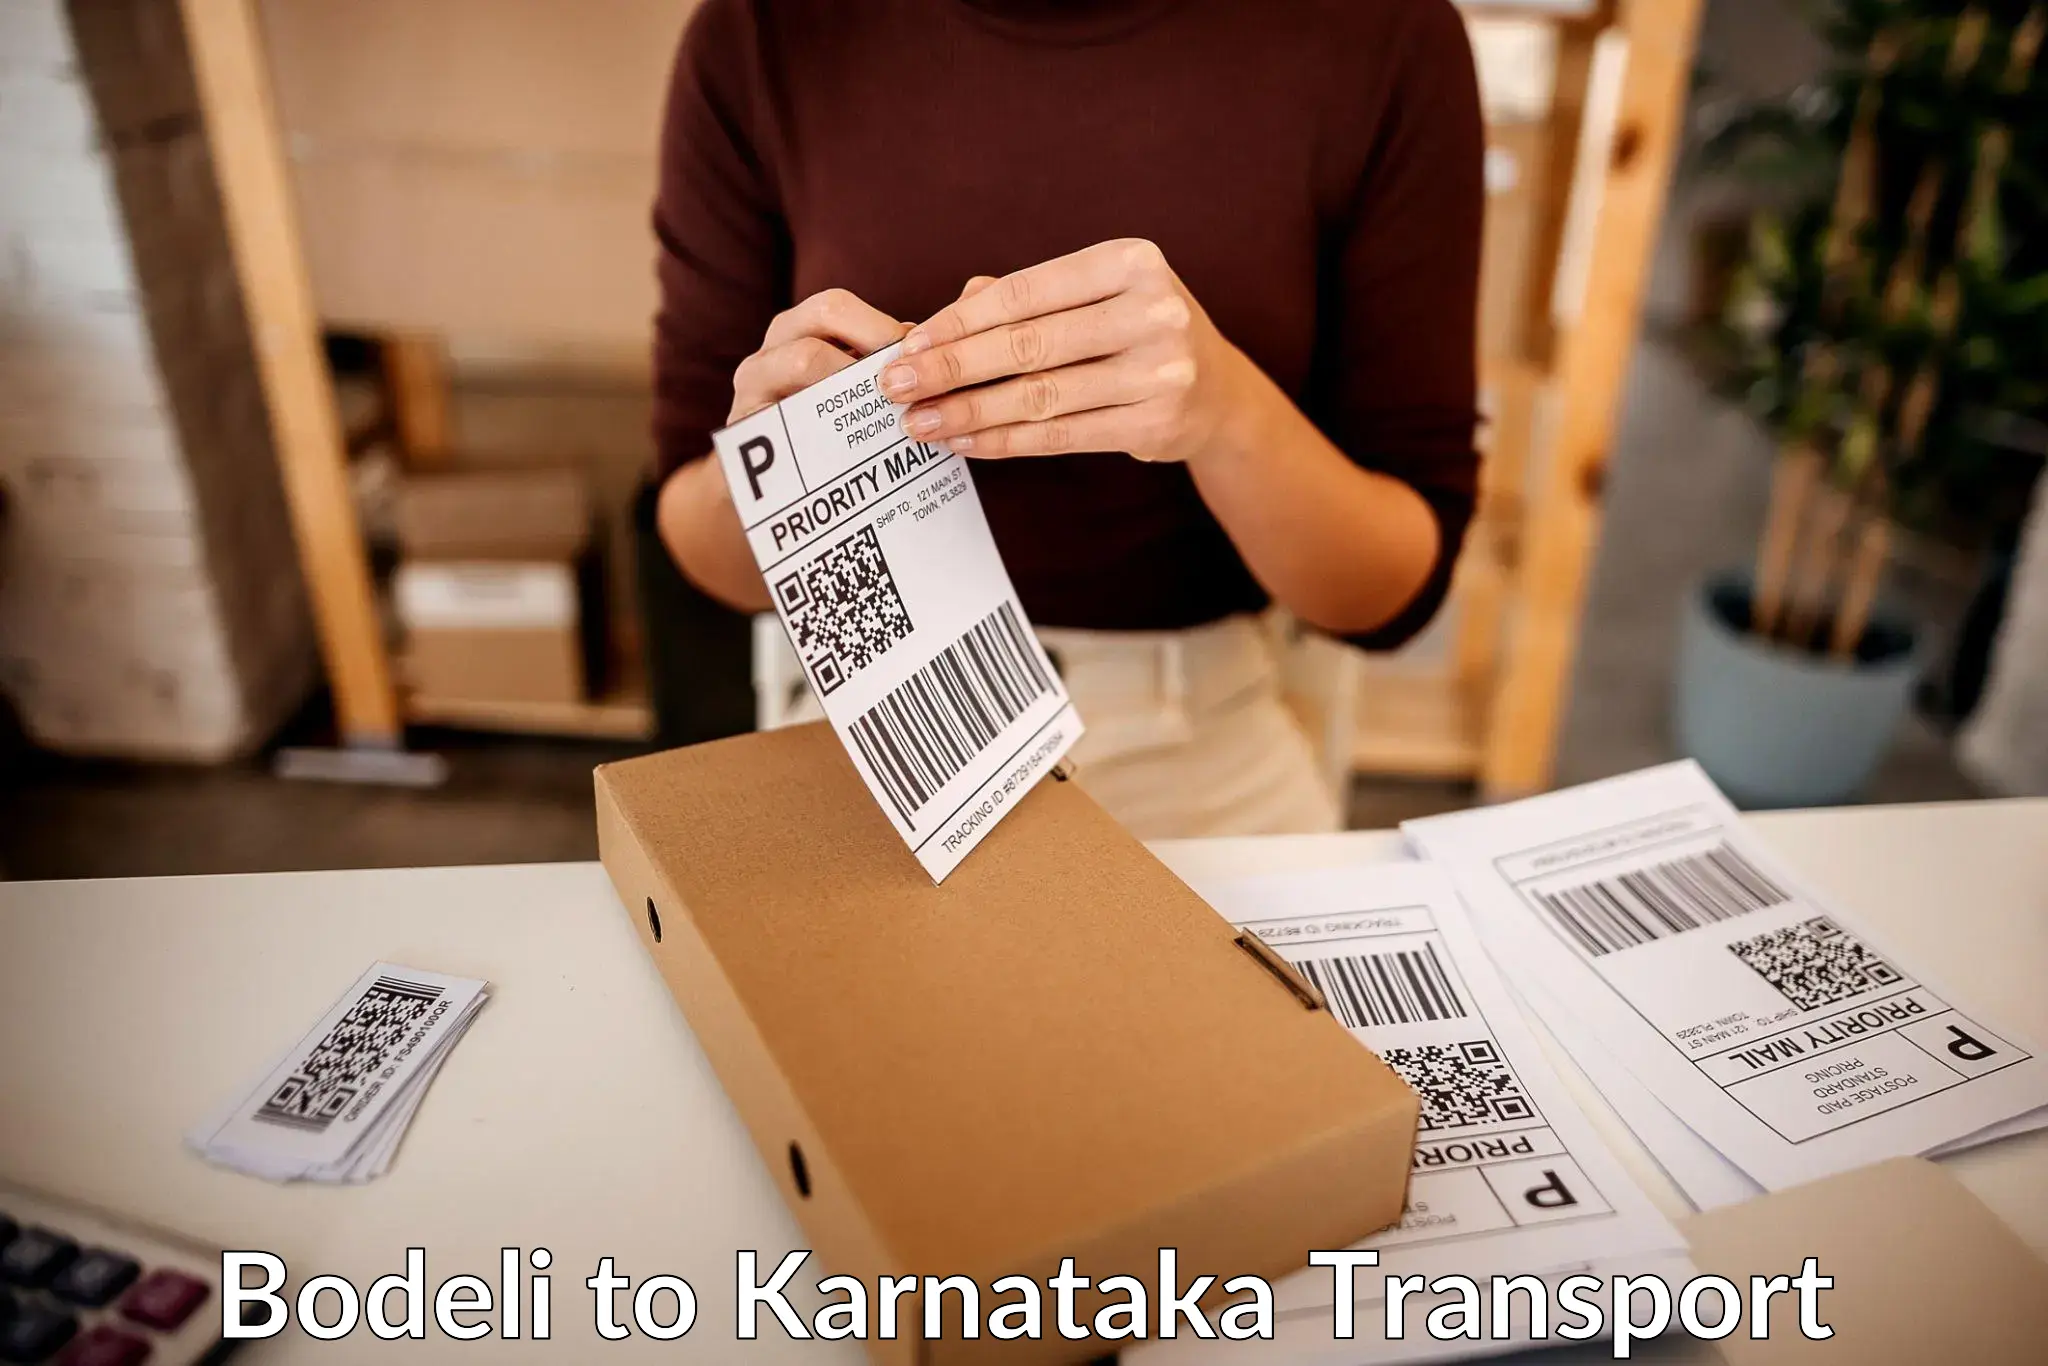 Truck transport companies in India Bodeli to Karnataka